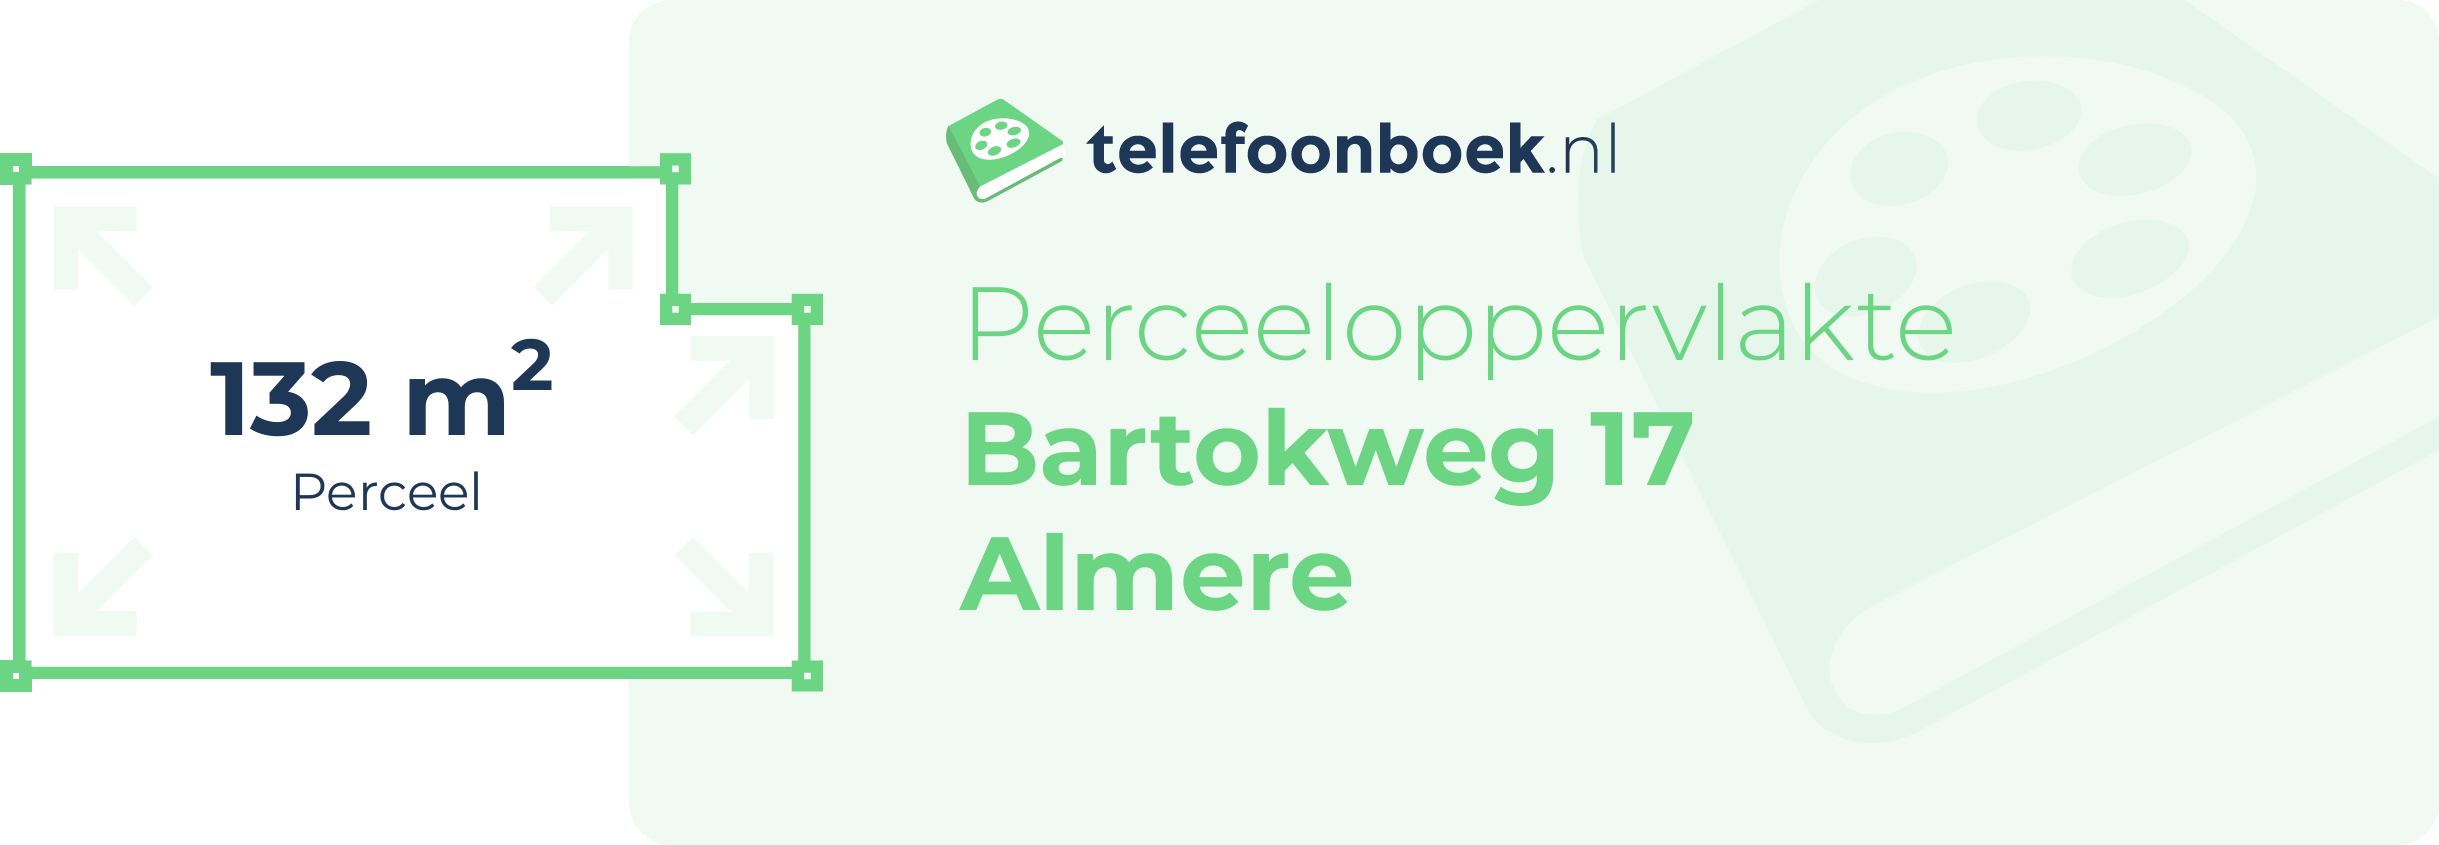 Perceeloppervlakte Bartokweg 17 Almere